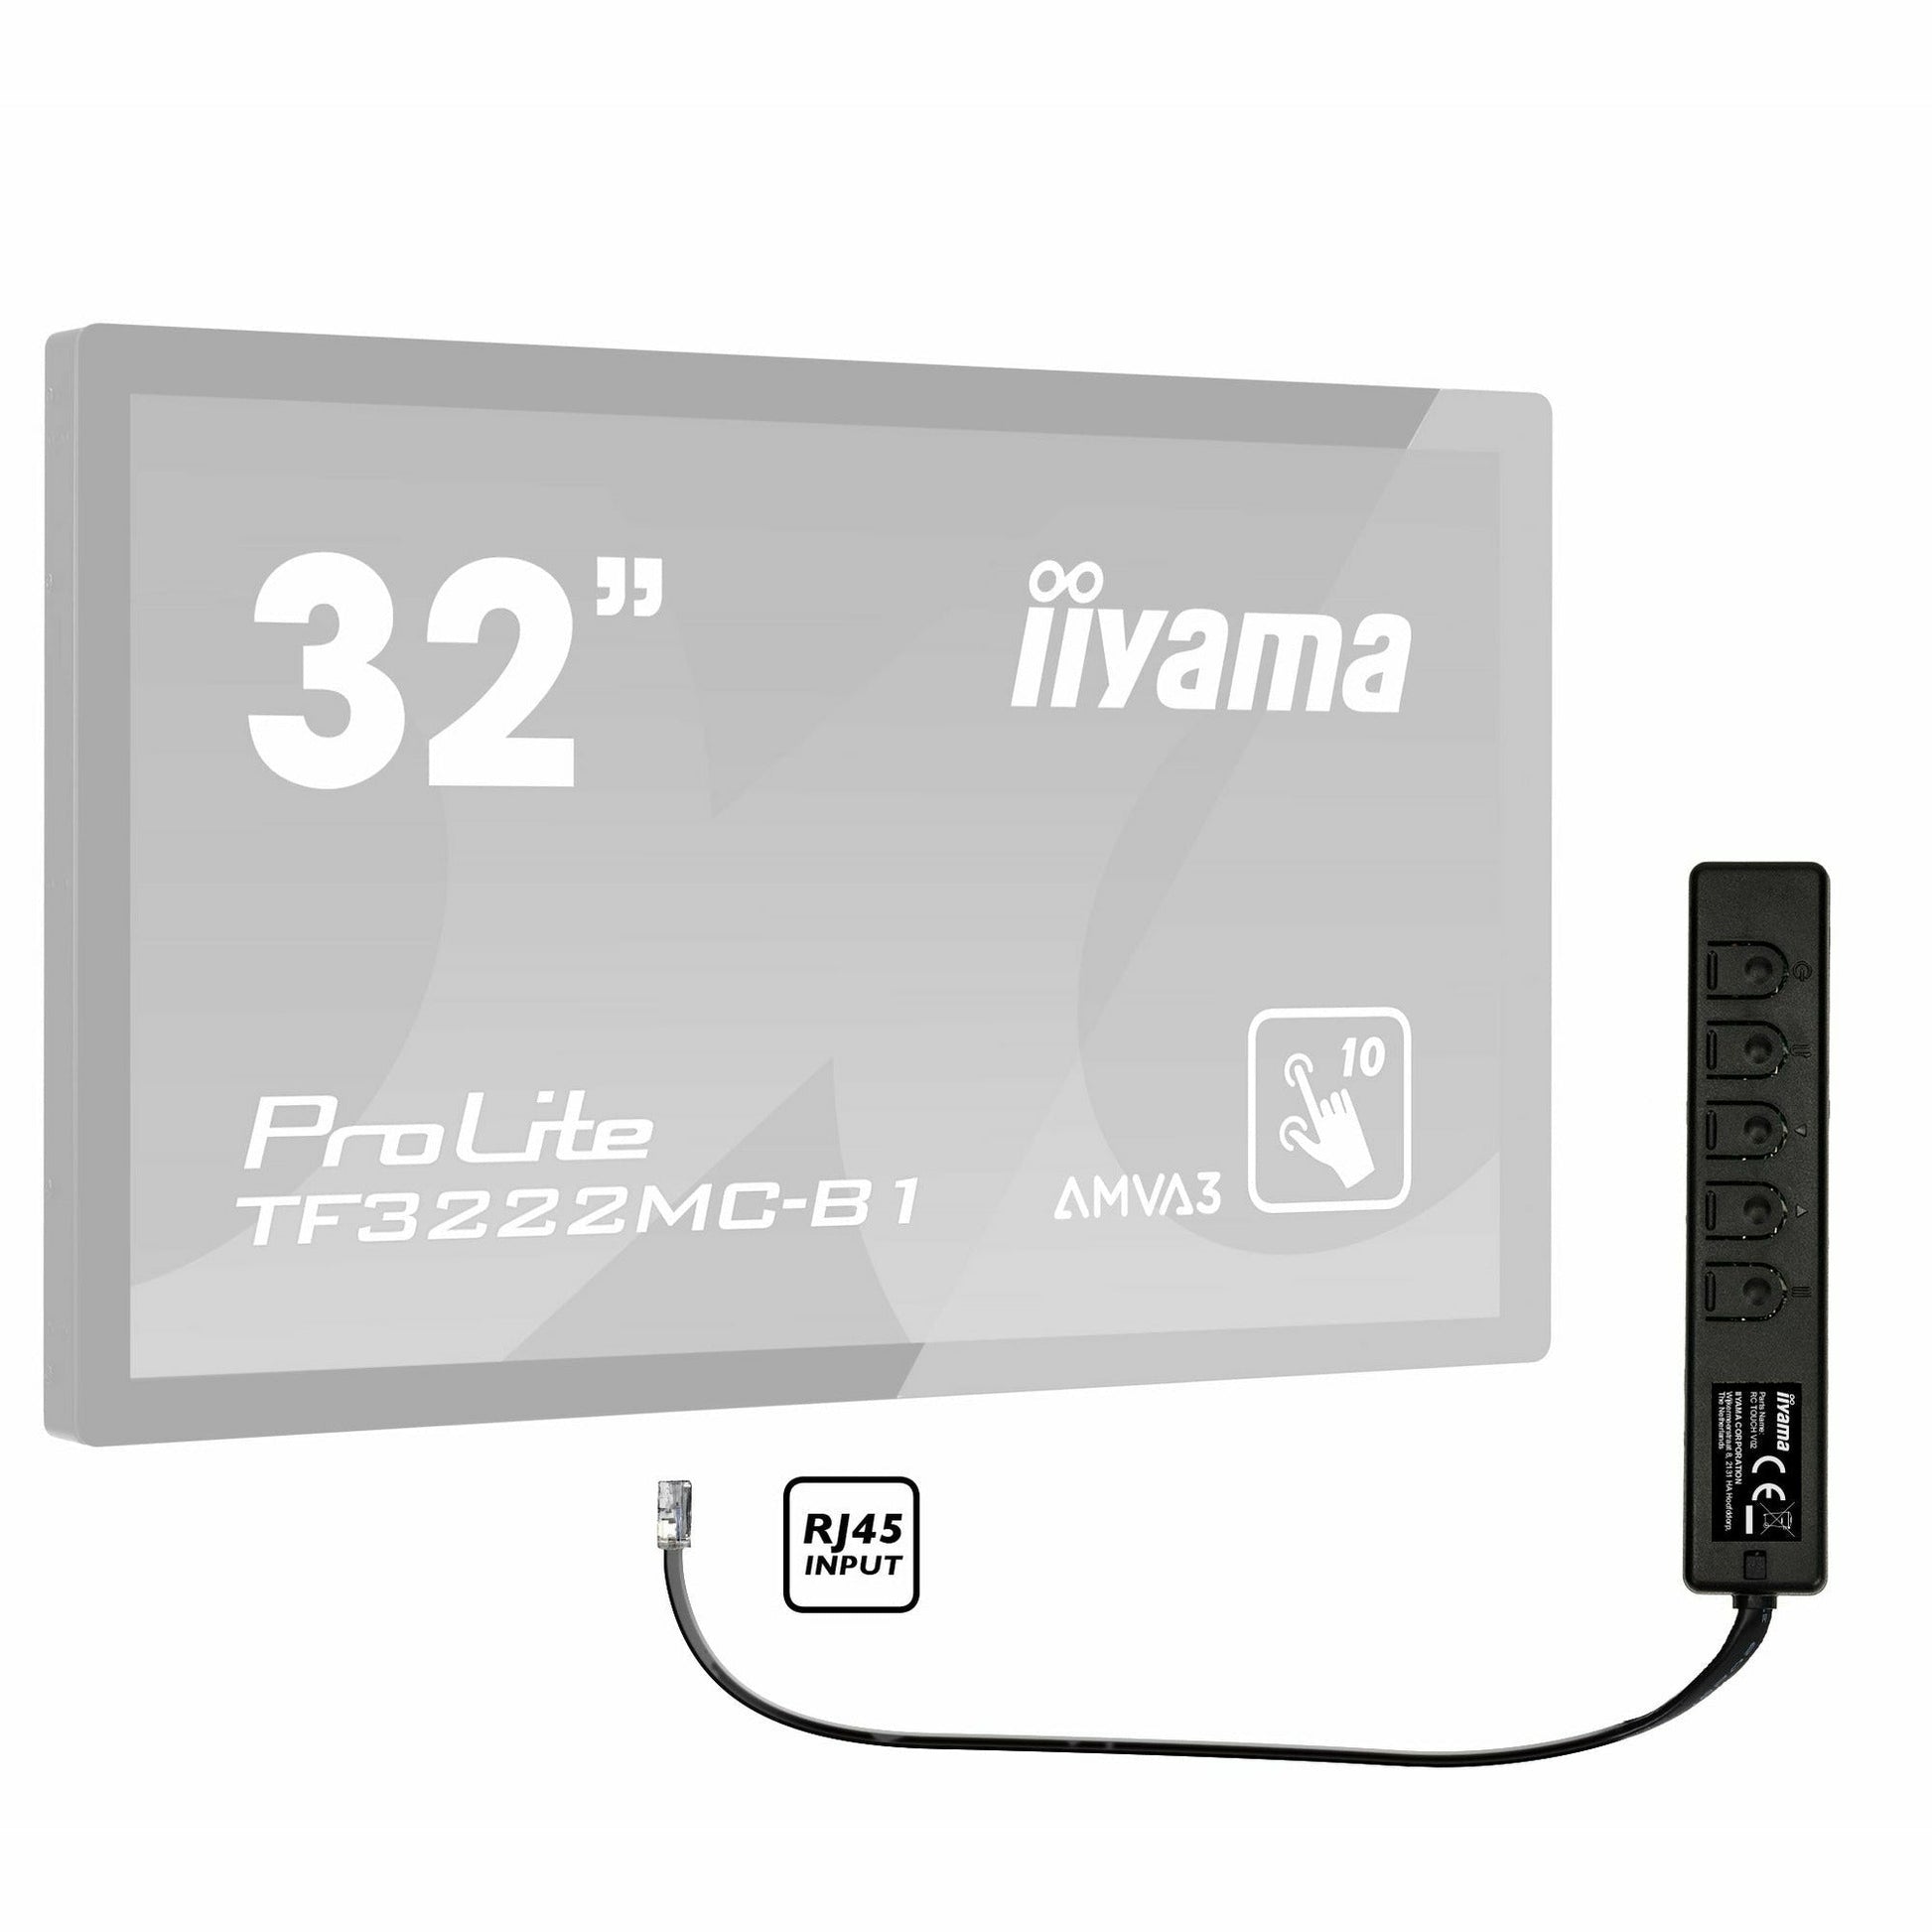 Gray Iiyama External Control Pad for T(F)xx34 Series Touchscreens